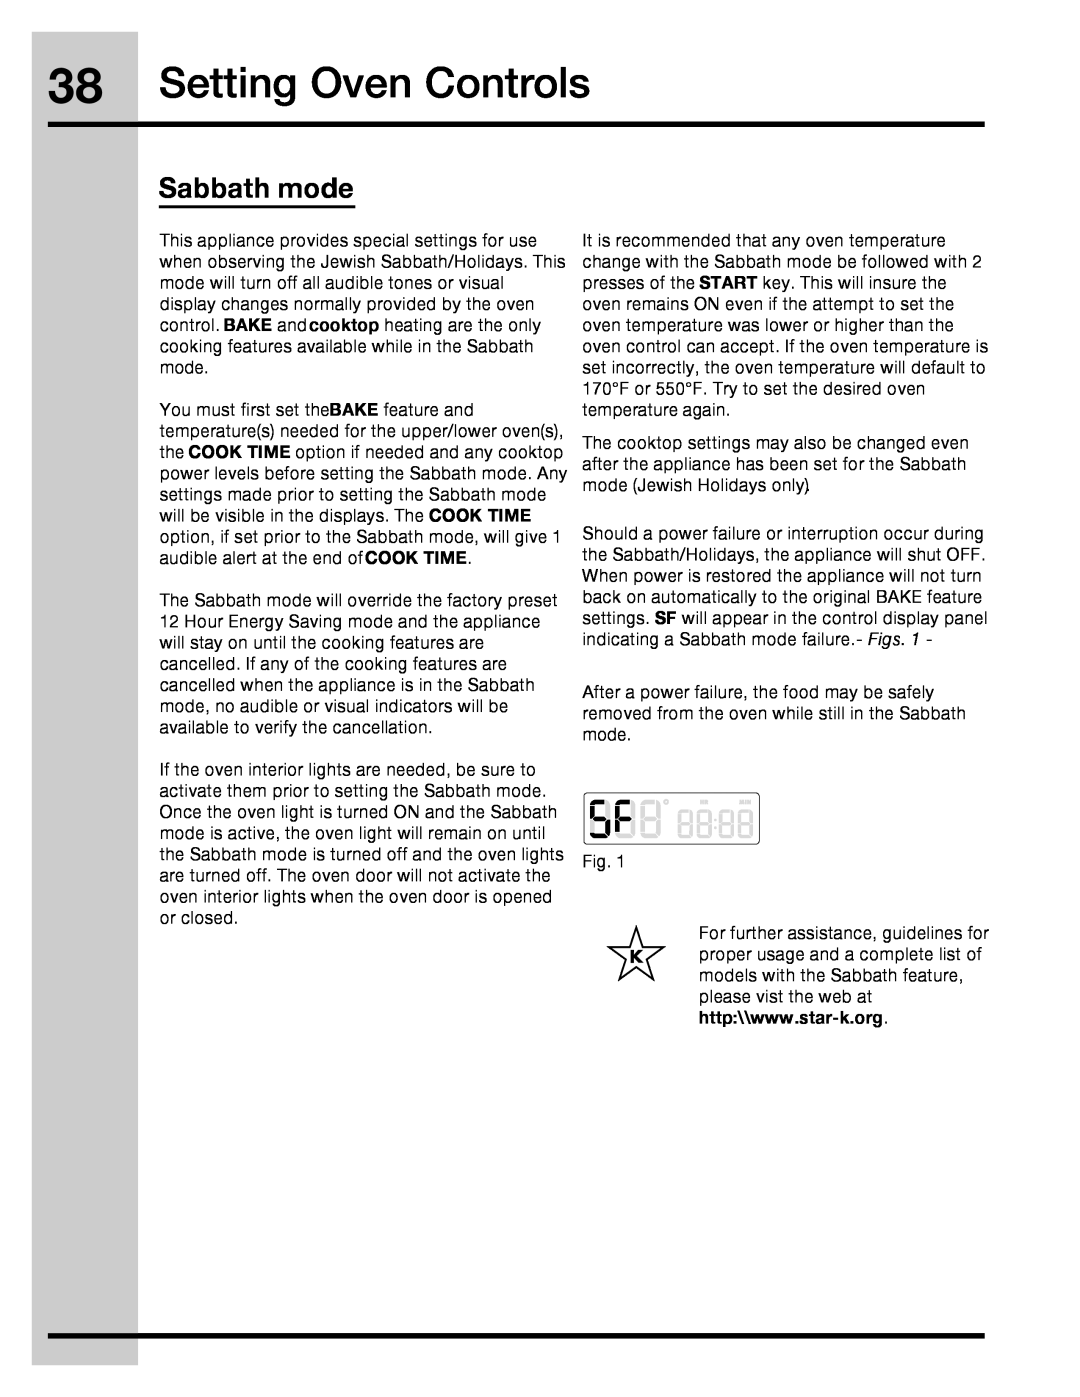 Electrolux 316471110 manual Setting Oven Controls, Sabbath mode 